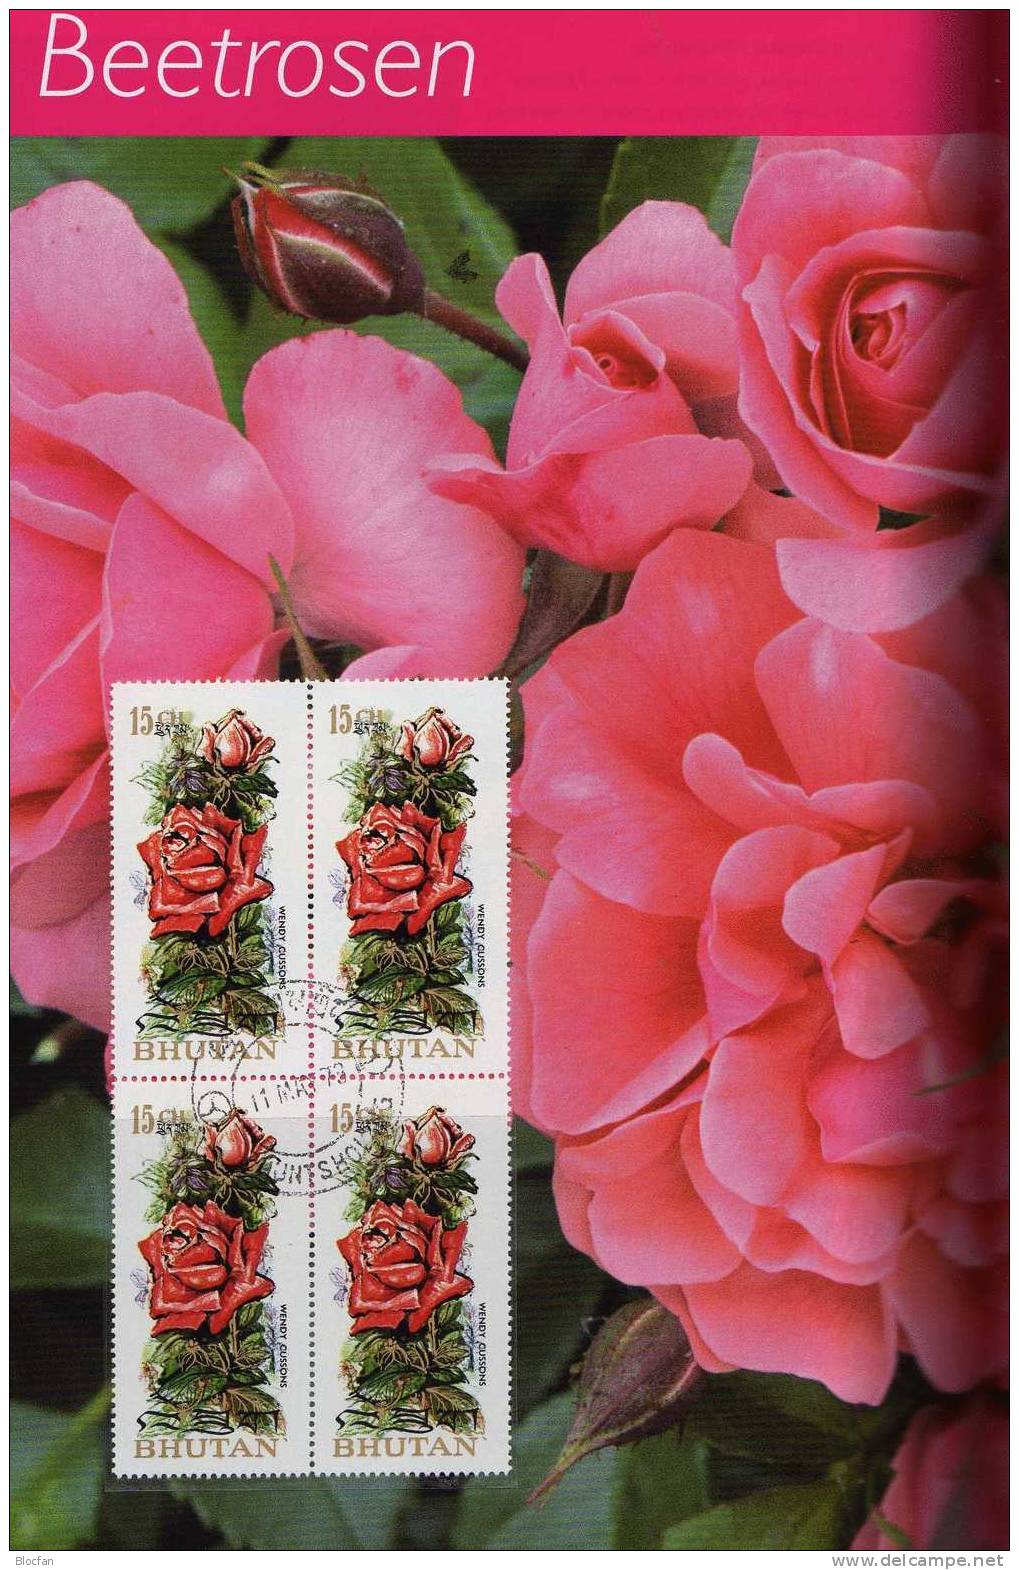 Rosen-Züchtungen 1973 Bhutan 545/50+4-Block o 42€ duftende Blumen im Bildband book and rose m/s flower sheet bf Asia